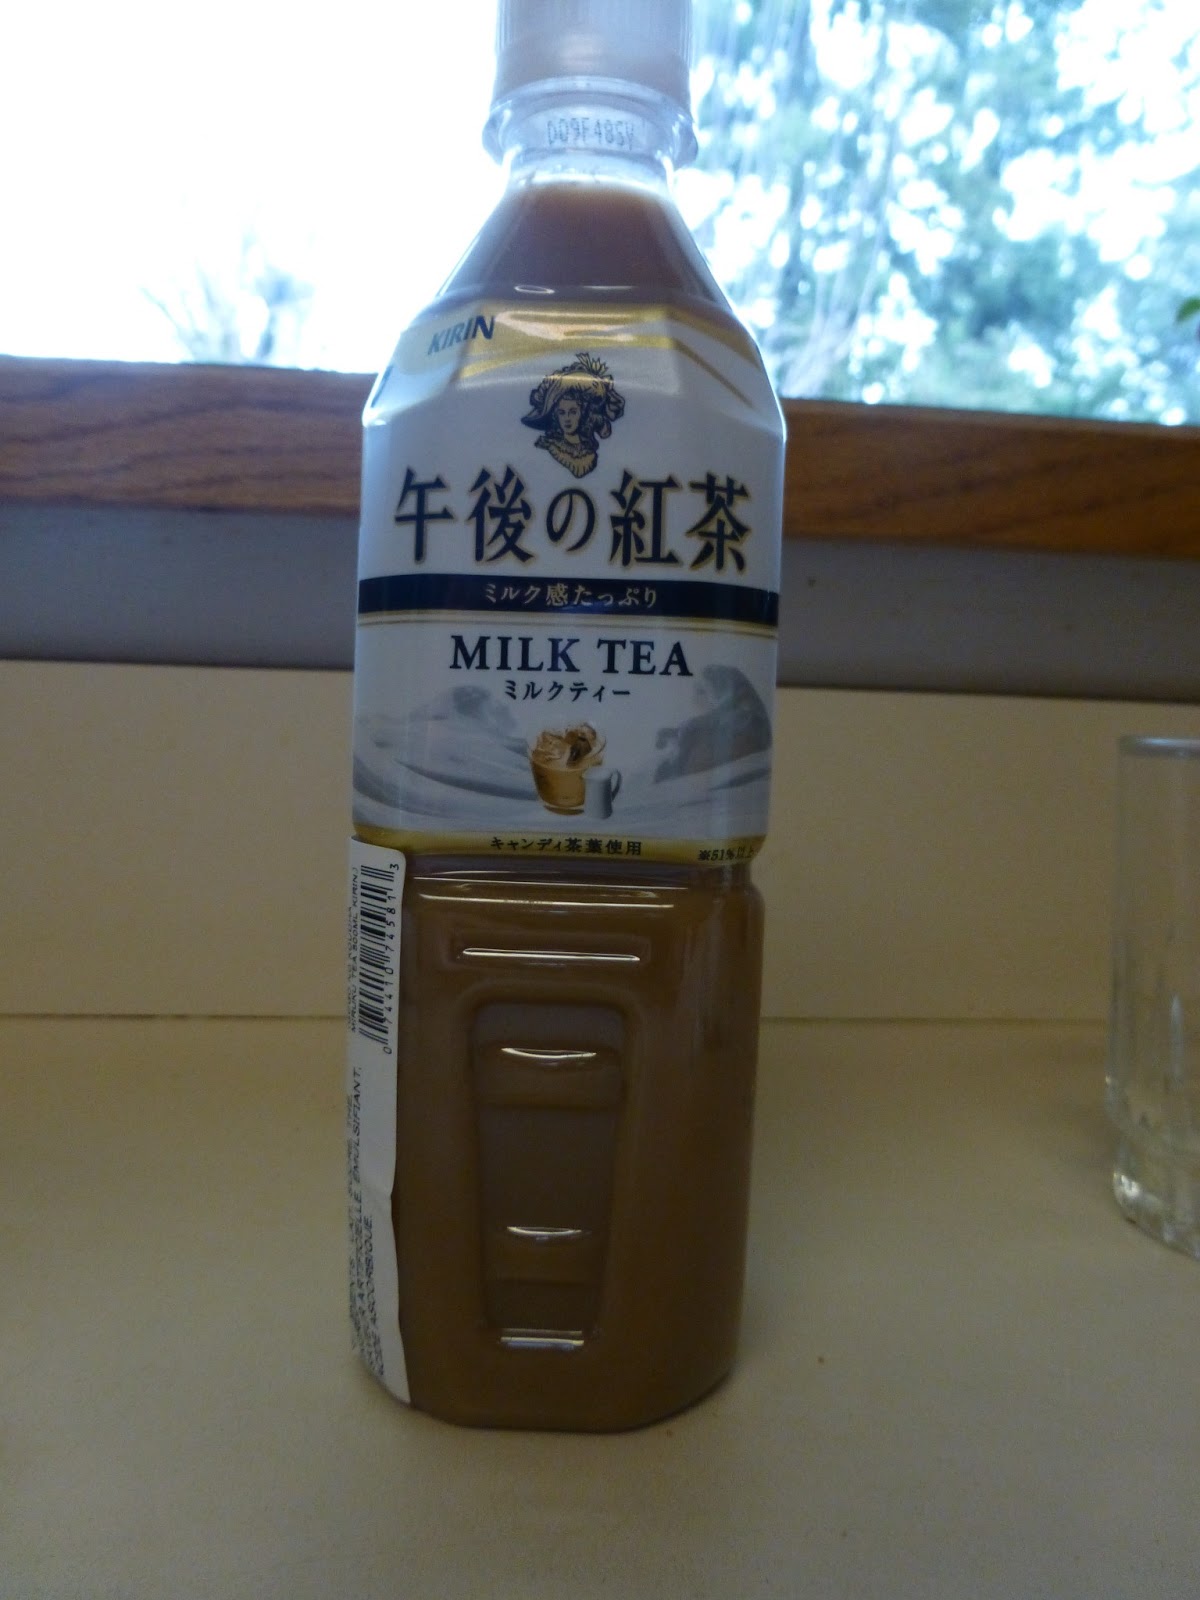 Royal Milk Tea #3: Kirin's | kfclovesyou